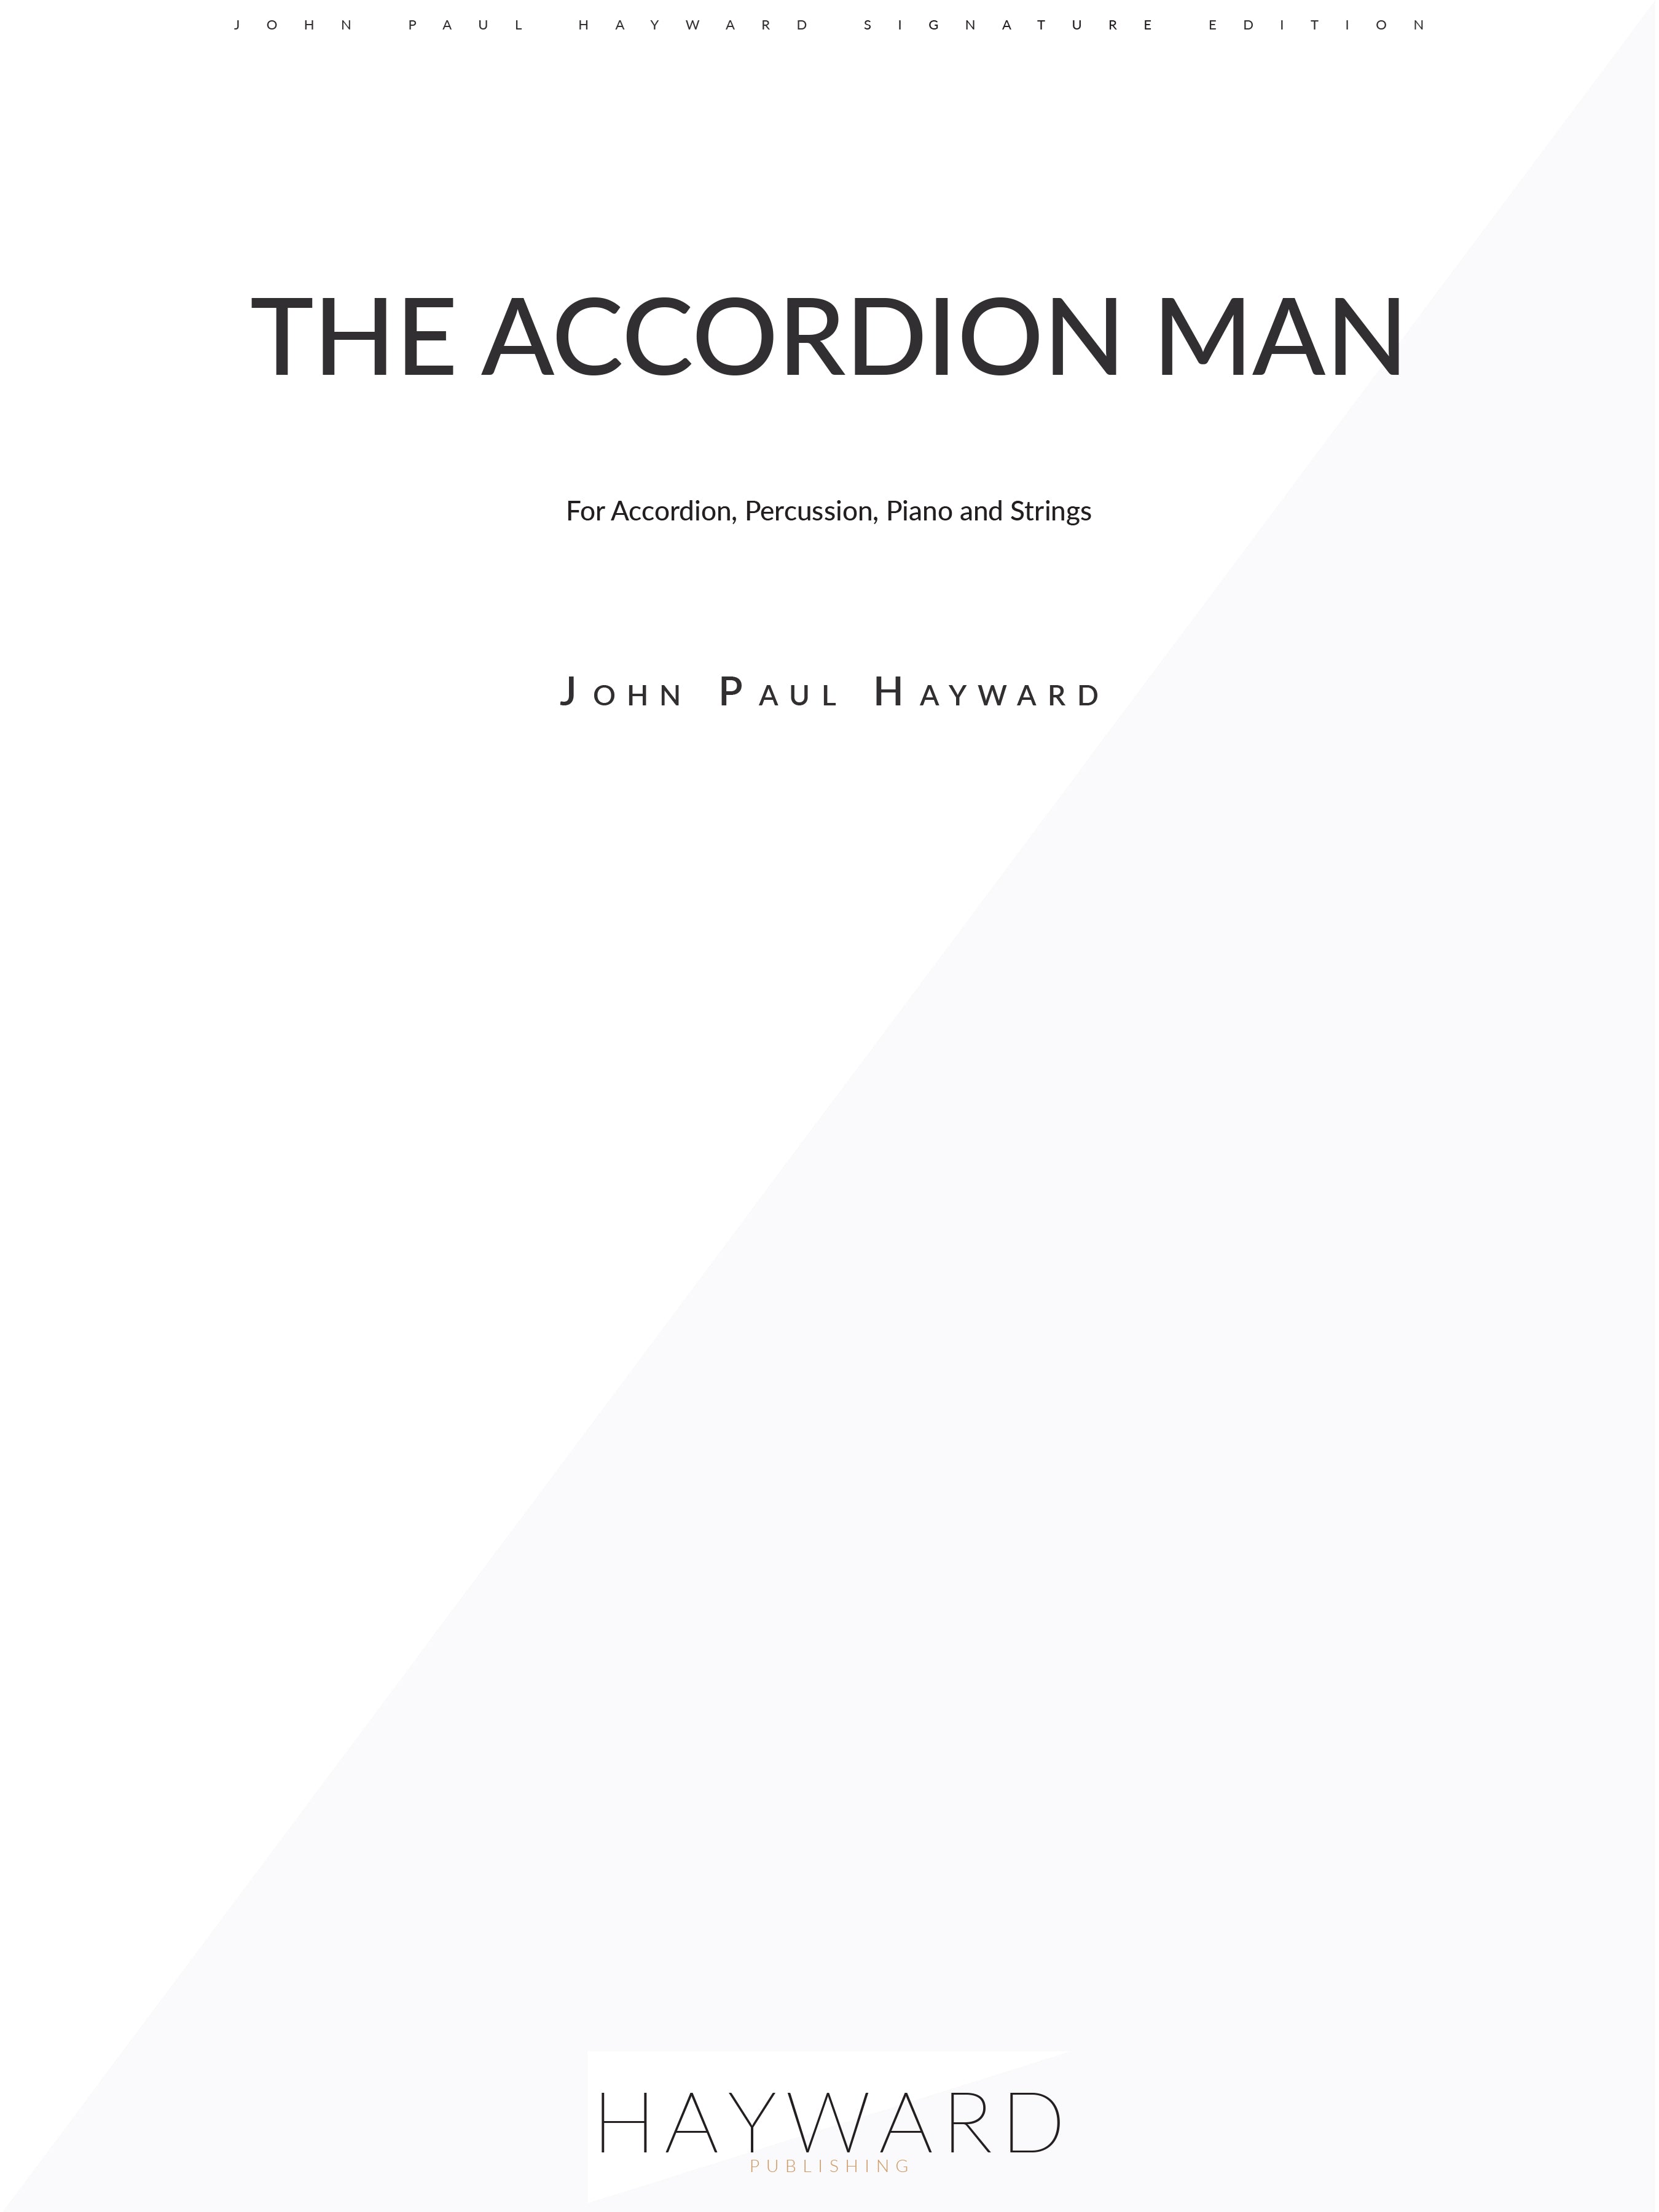 The Accordion Man